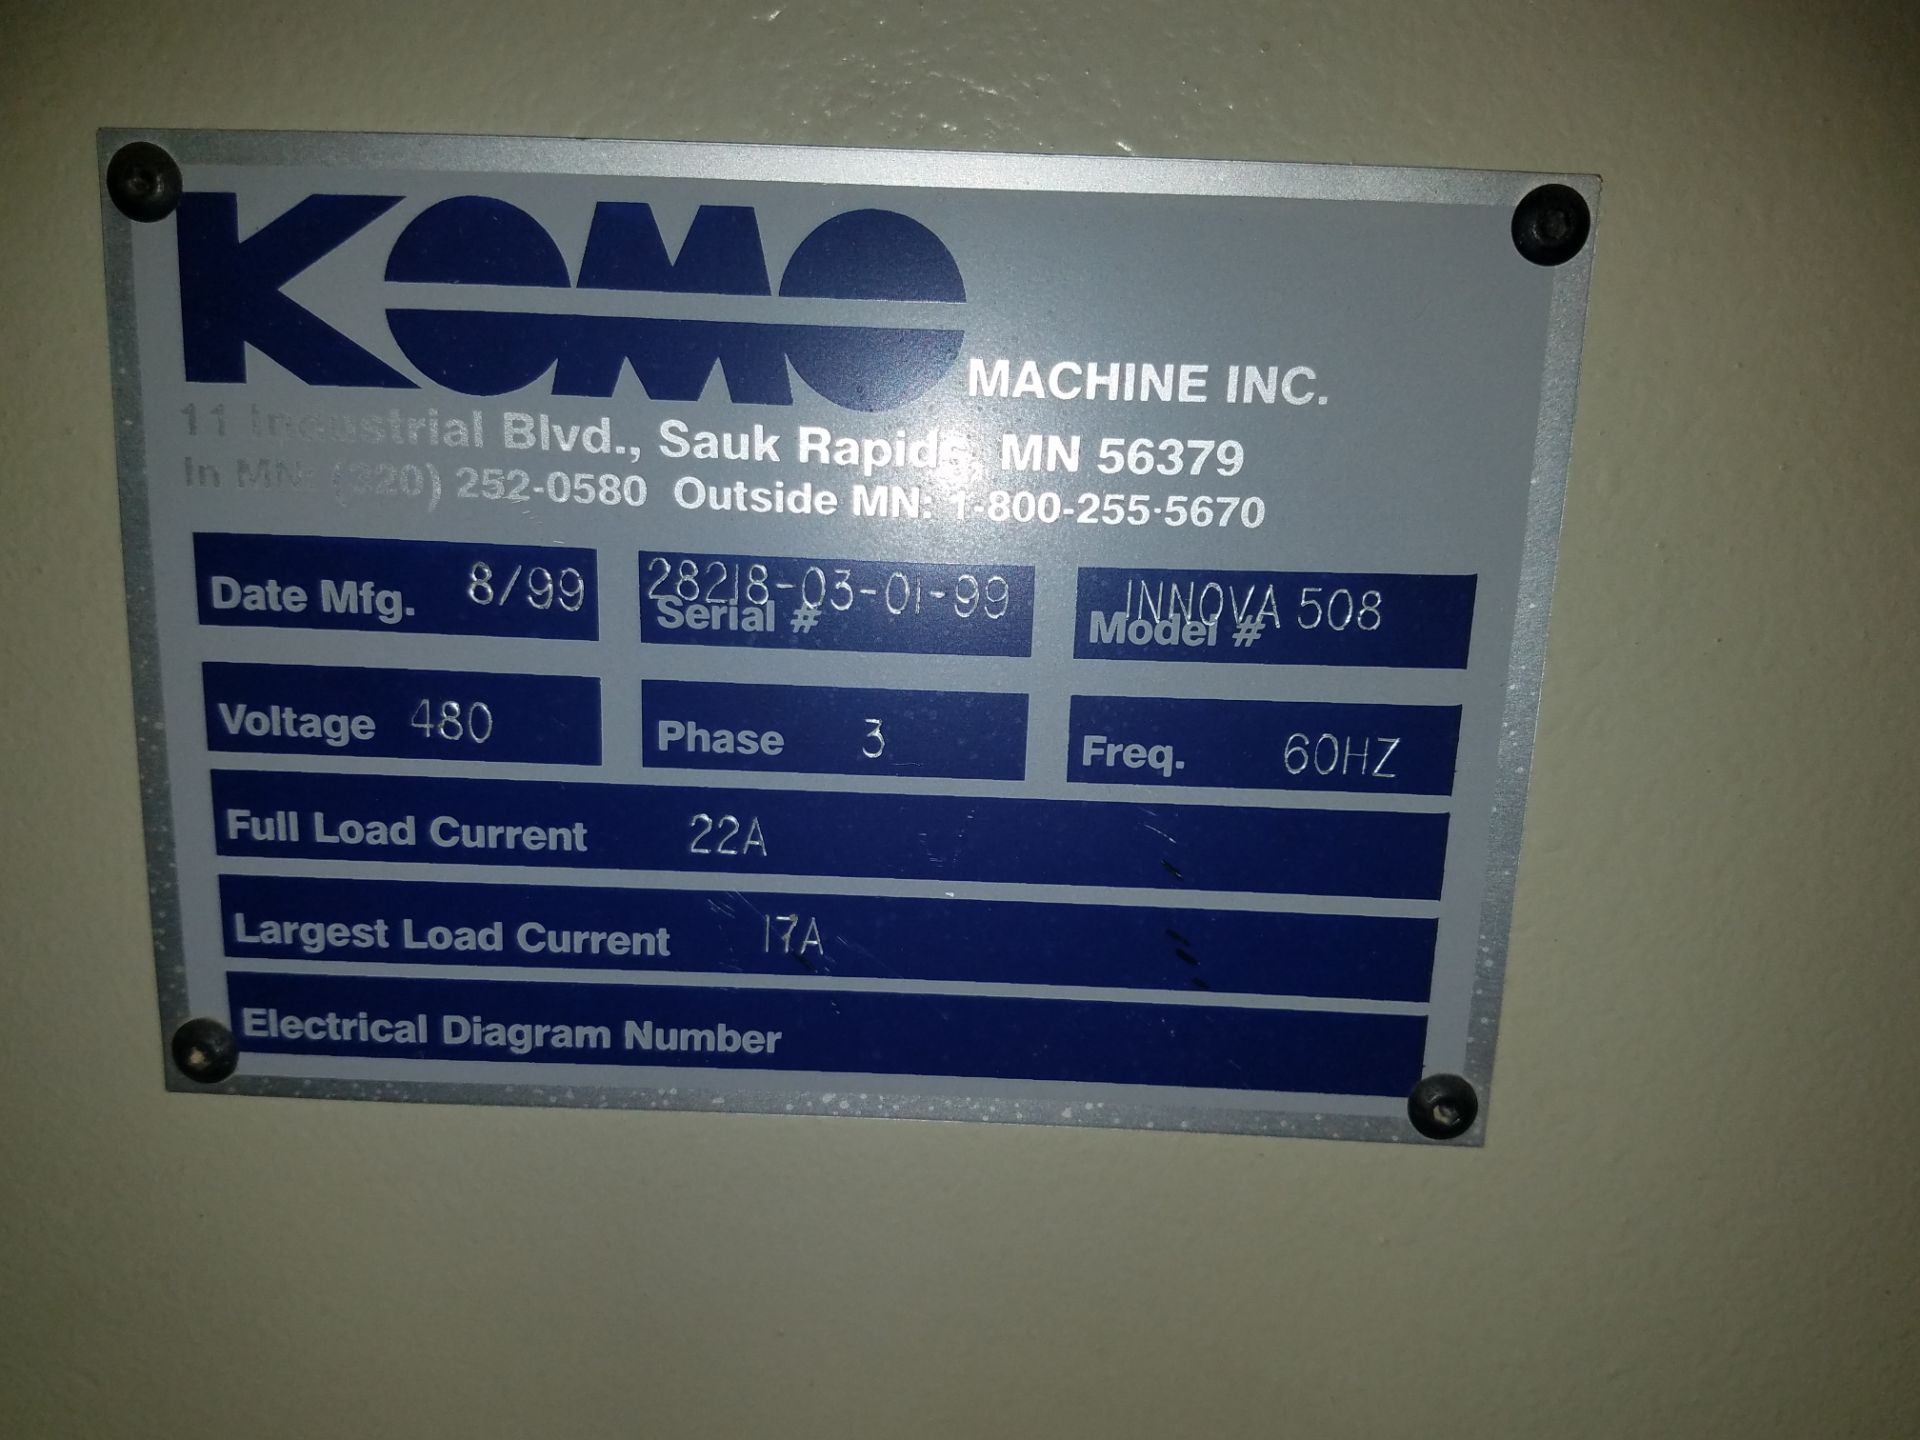 Komo Model Innova 508 CNC Router, s/n 28218-03-01-99, New 1999, Fanuc CNC Control, 18,000 RPM - Image 2 of 4